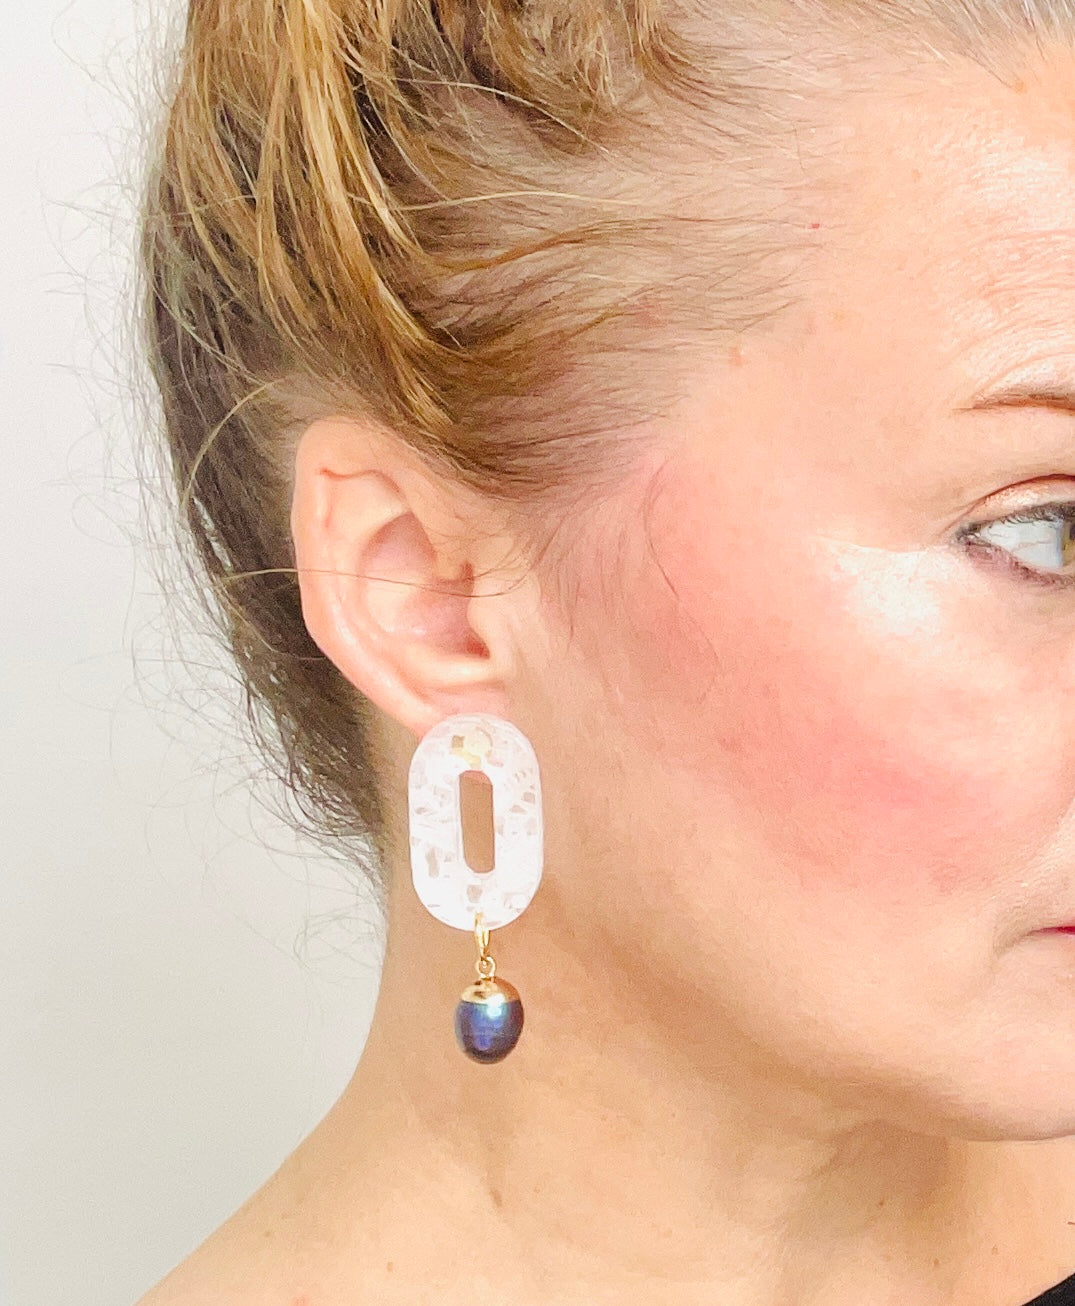 Lace Pattern, Clear Acrylic Dangle Earrings with drop bead 5cm x 2.5cm x 0.7cm